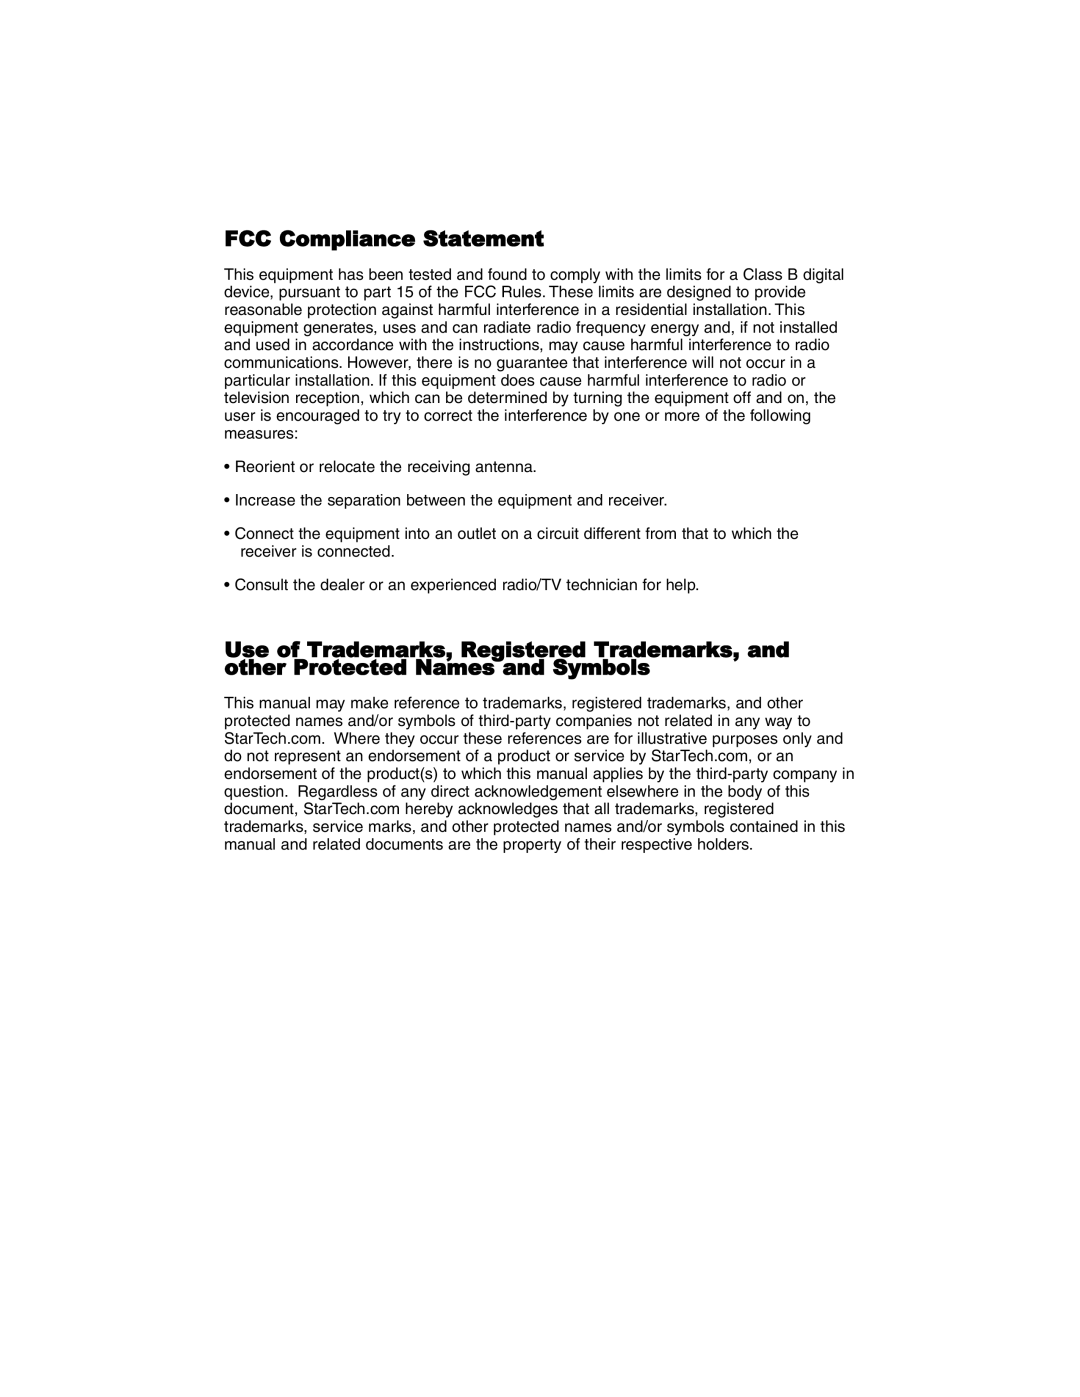 StarTech.com FAN939775HP instruction manual FCC Compliance Statement 